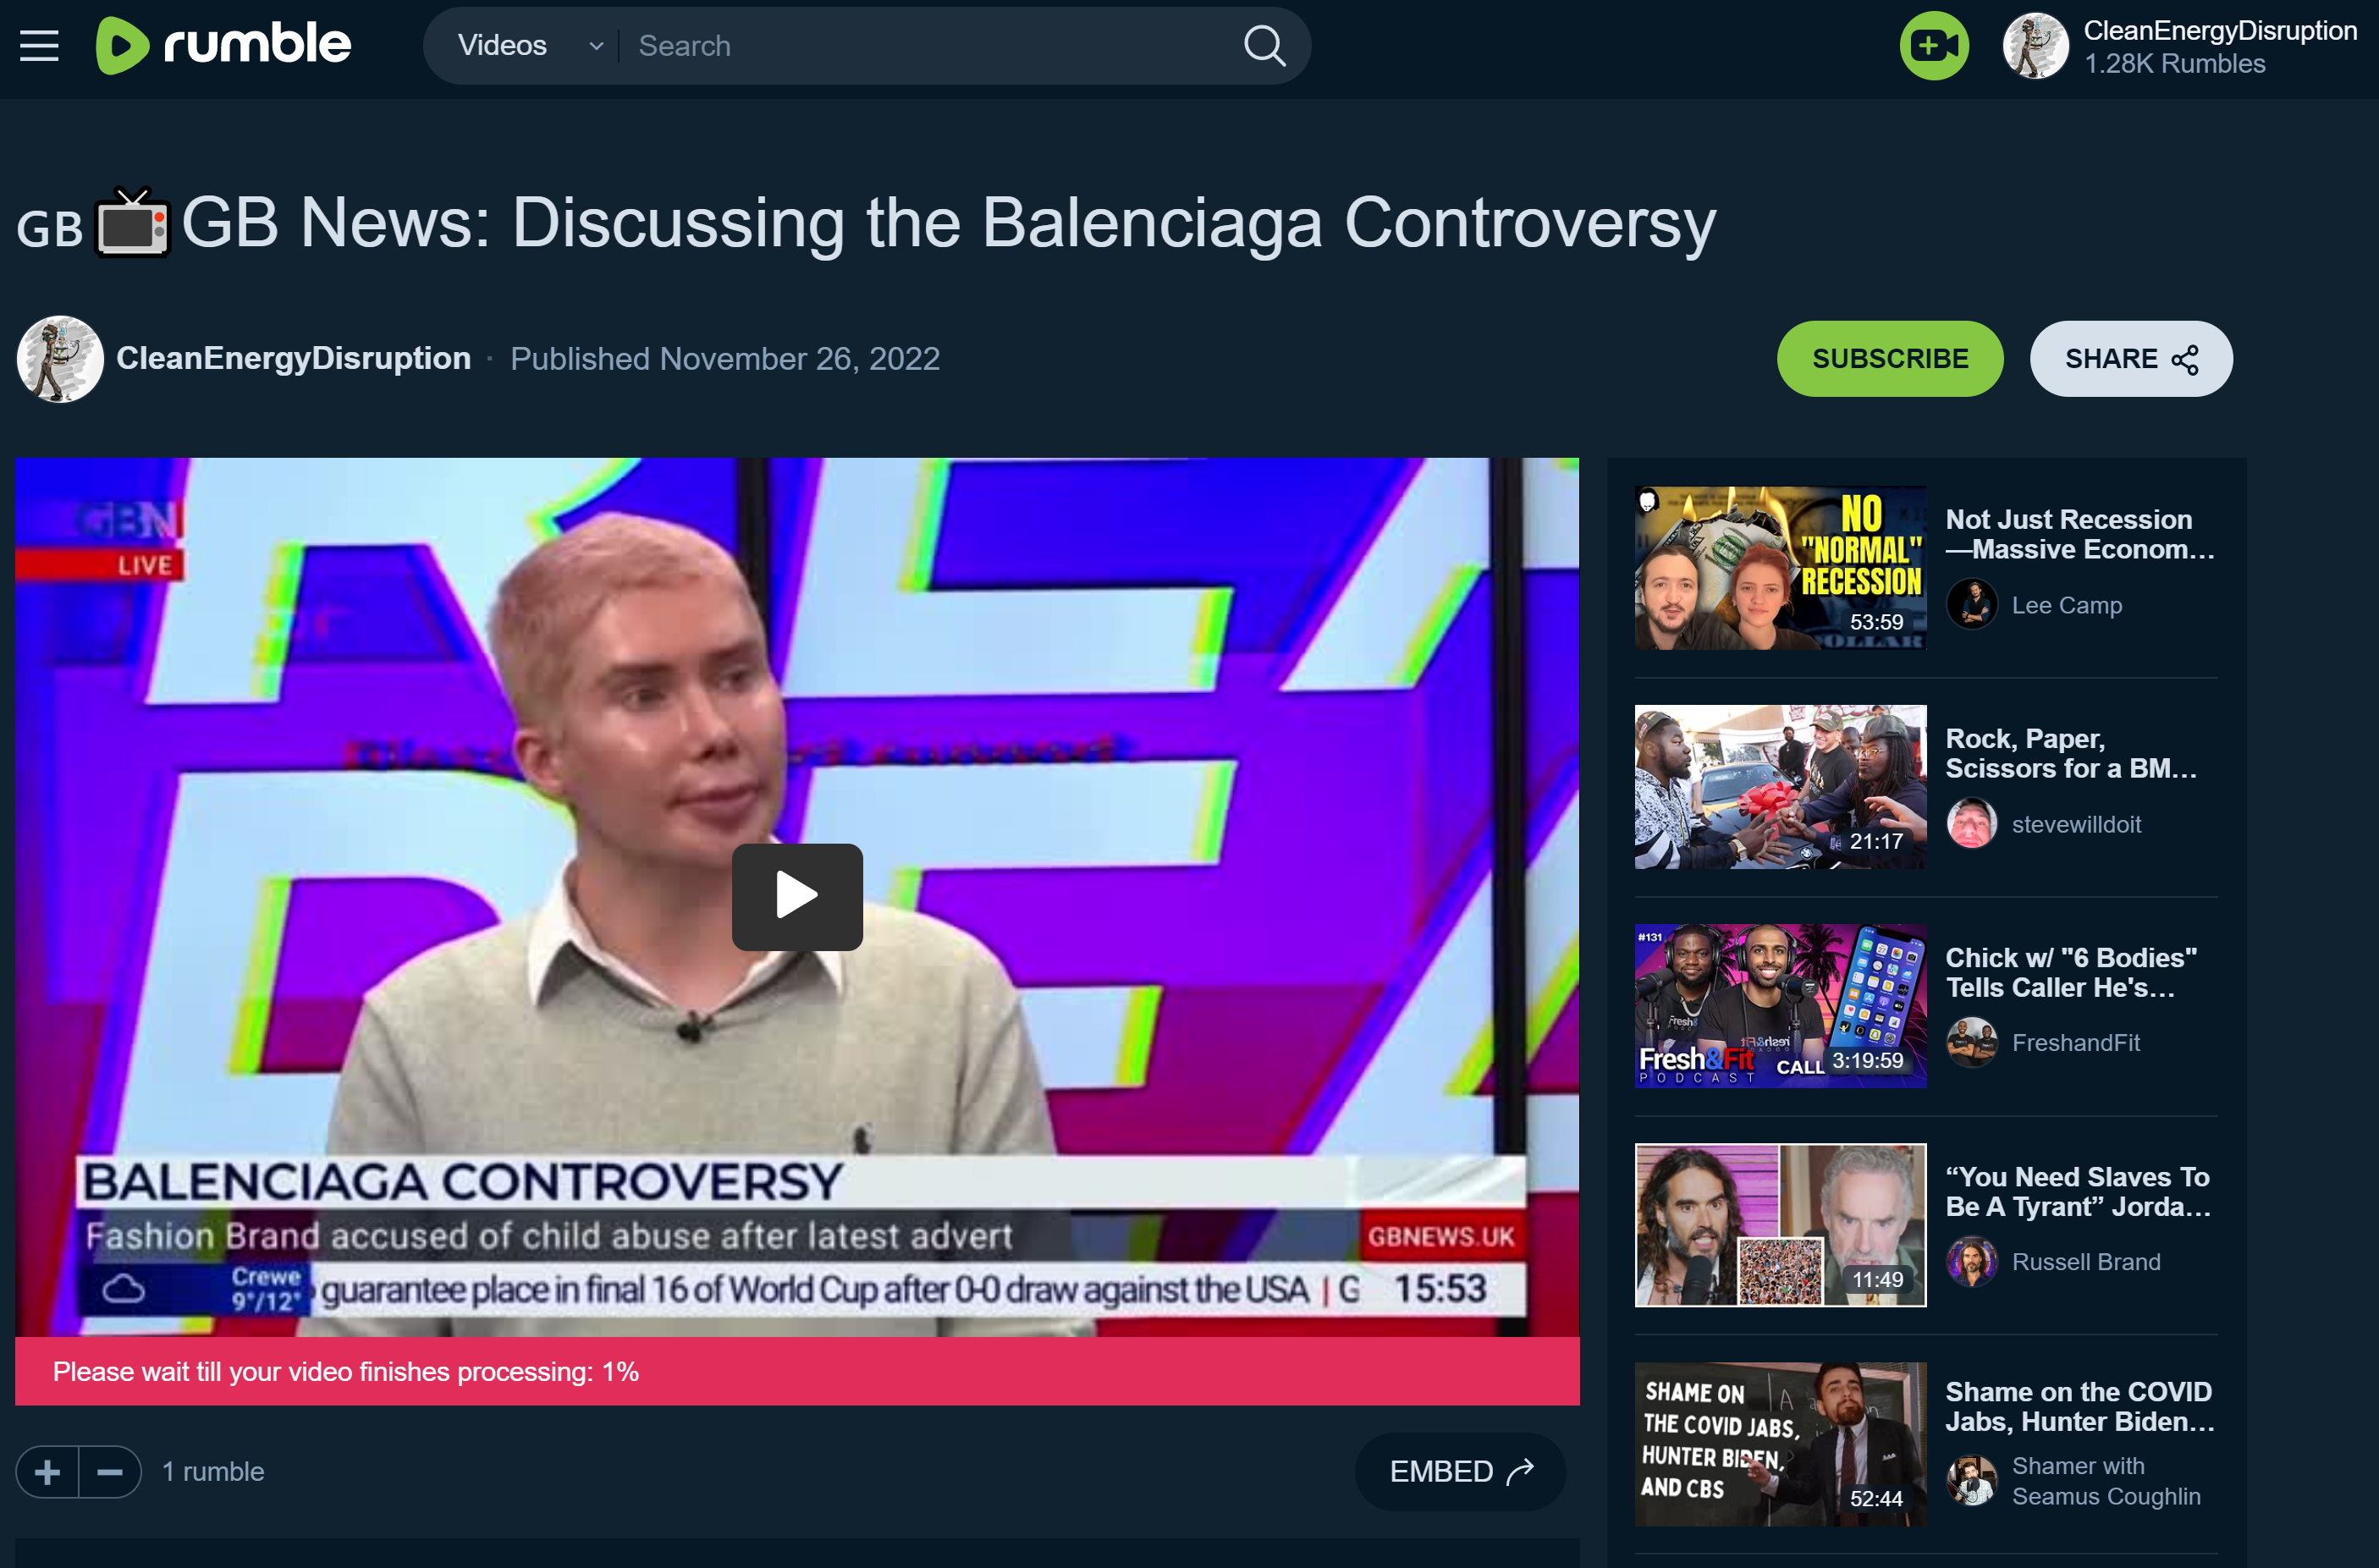 gb-news-discussing-the-balenciaga-controversy-blurt